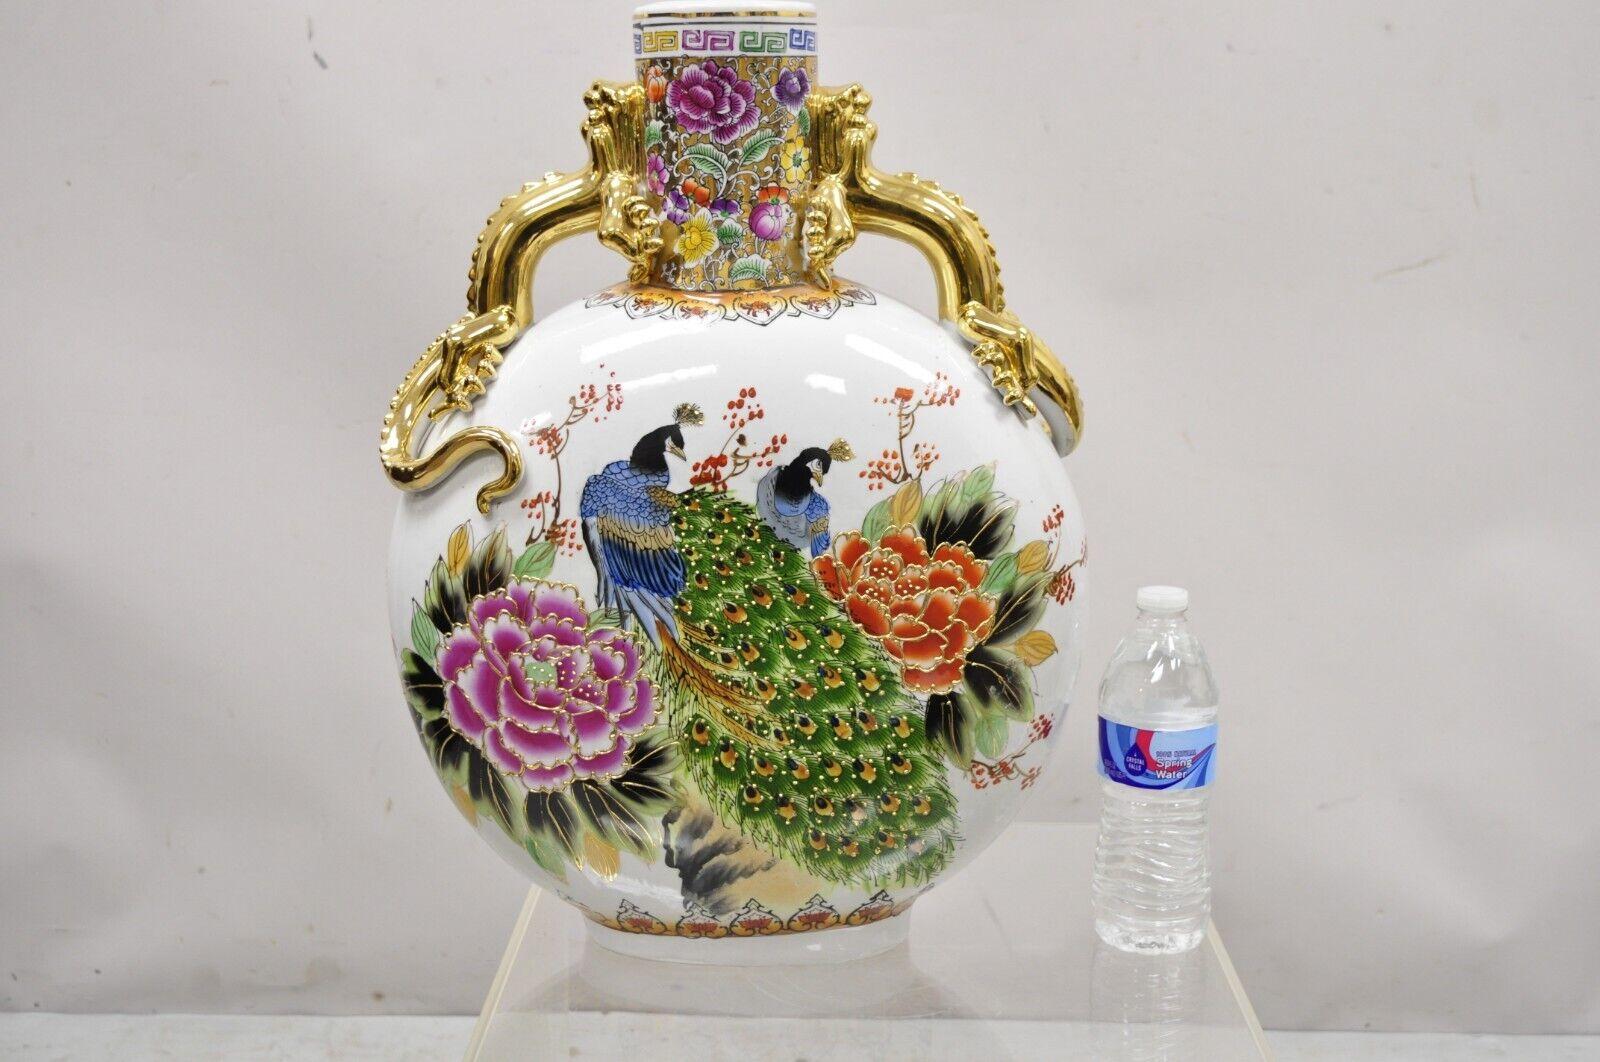 Vintage Chinese Famille Rose Porcelain Figural Orange Moon Flask vase with Dragons. Item features twin dragon handles, gold gilt details, figural 